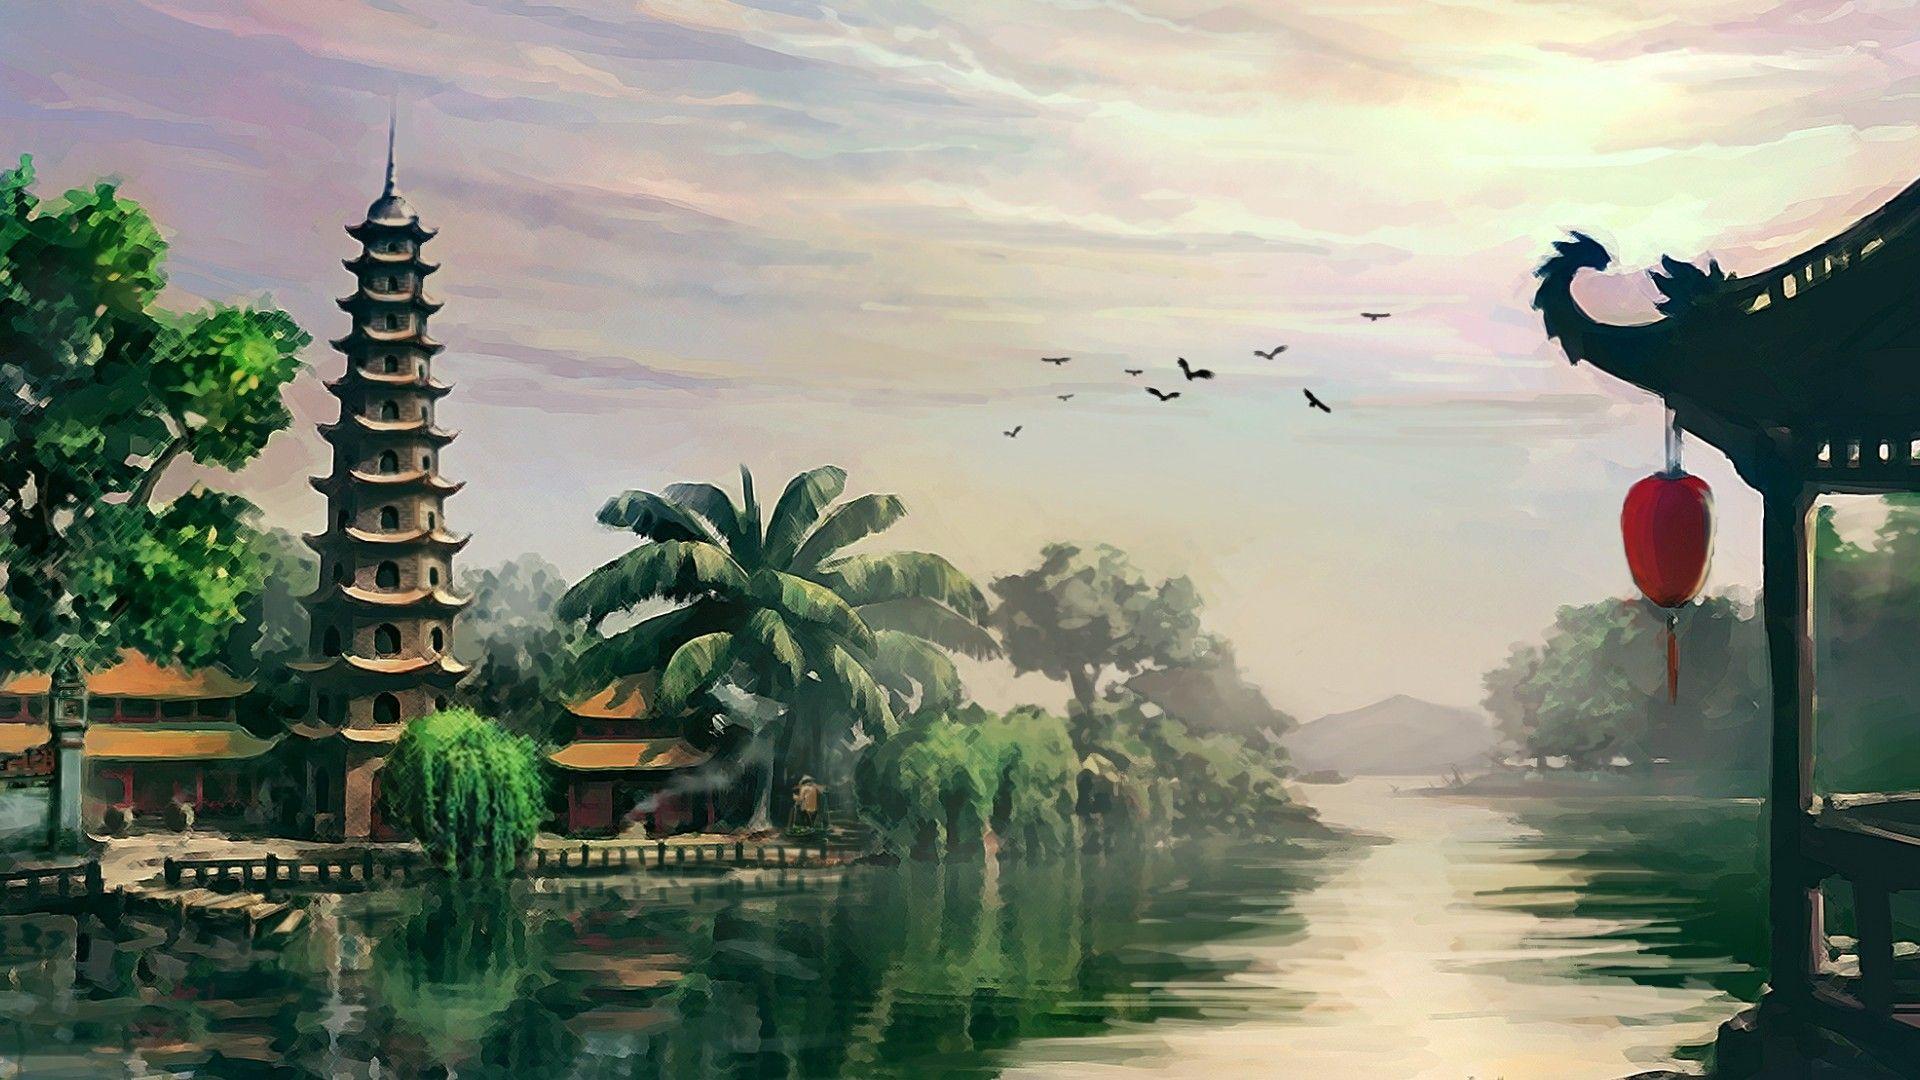 Vietnam Landscape Painting Wallpaper For Desktop & Mobile